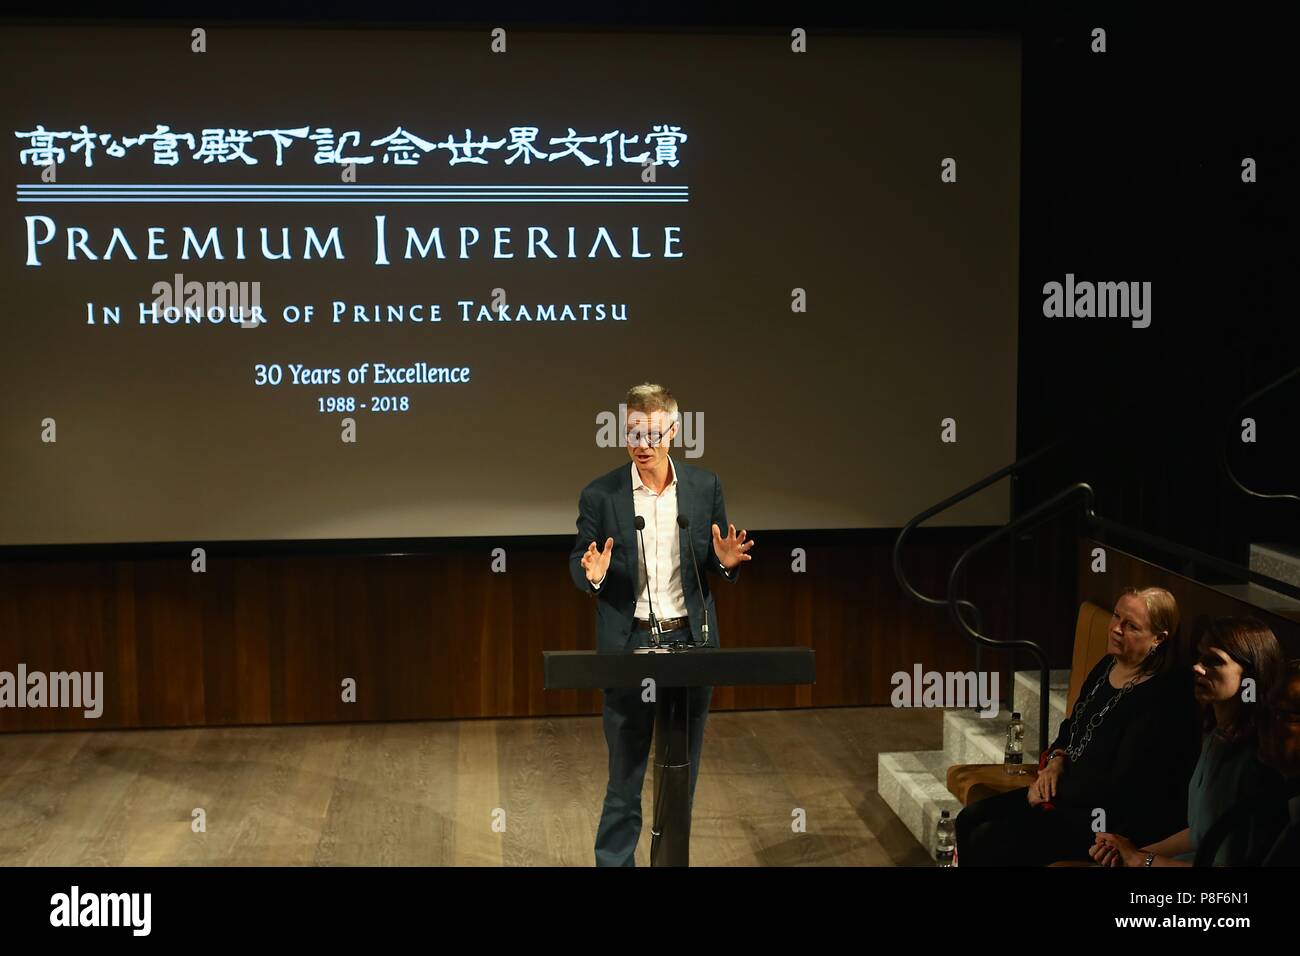 PRAEMIUM IMPERIALE IN HONOUR OF PRINCE TAKAMATSU Stock Photo